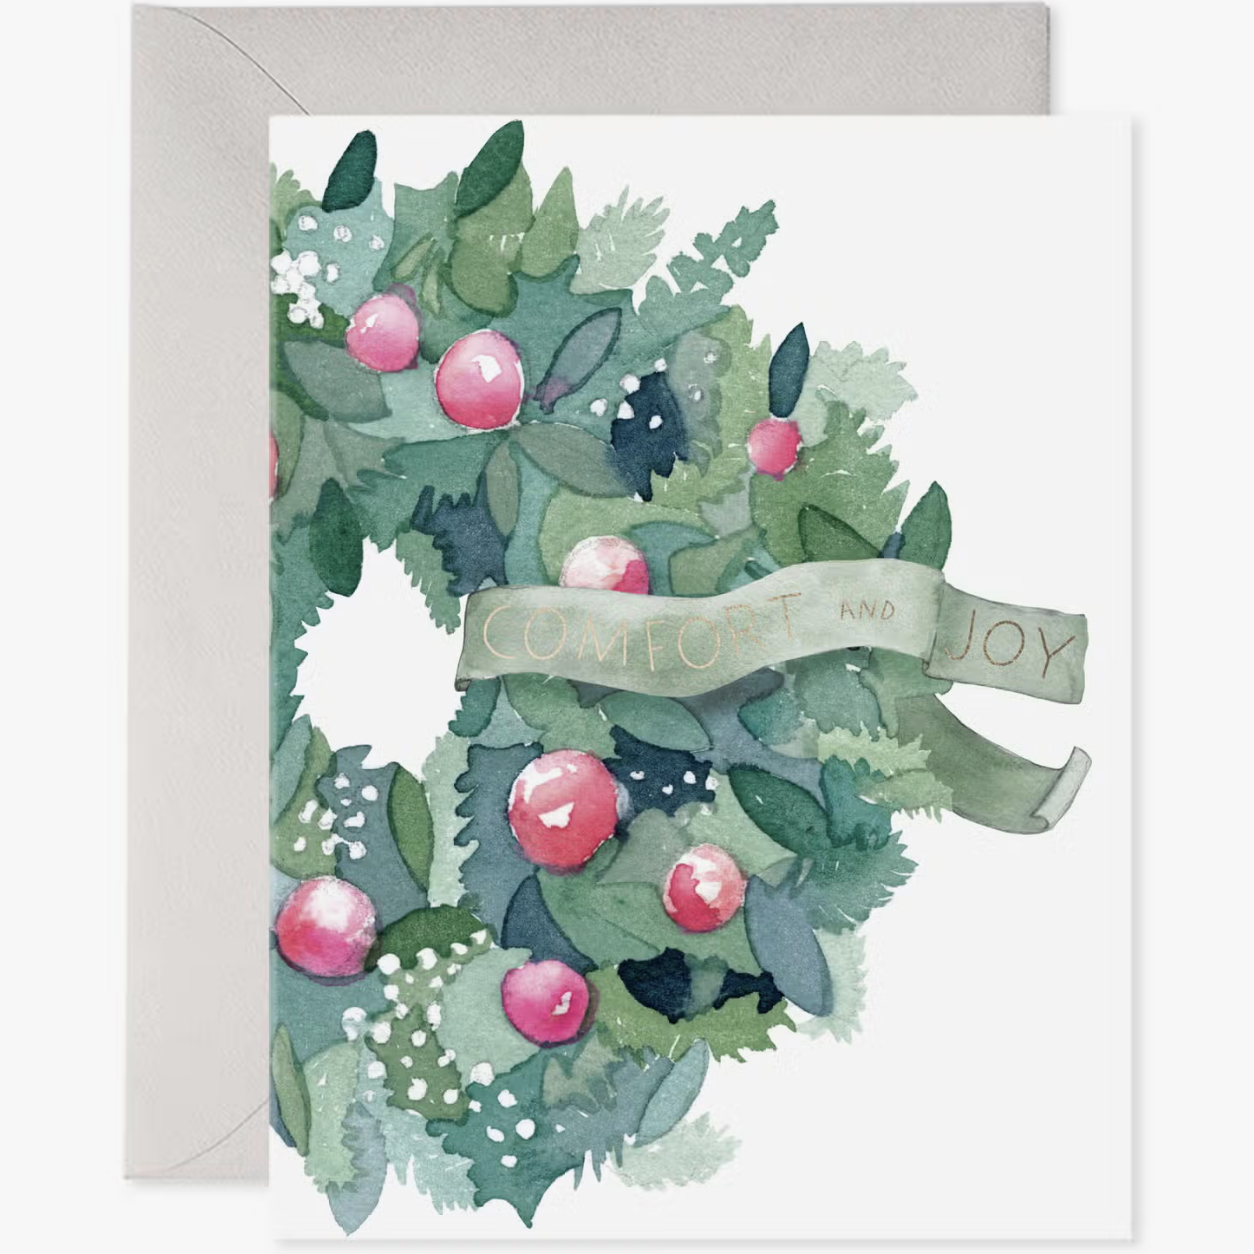 Comfort and Joy Wreath Card